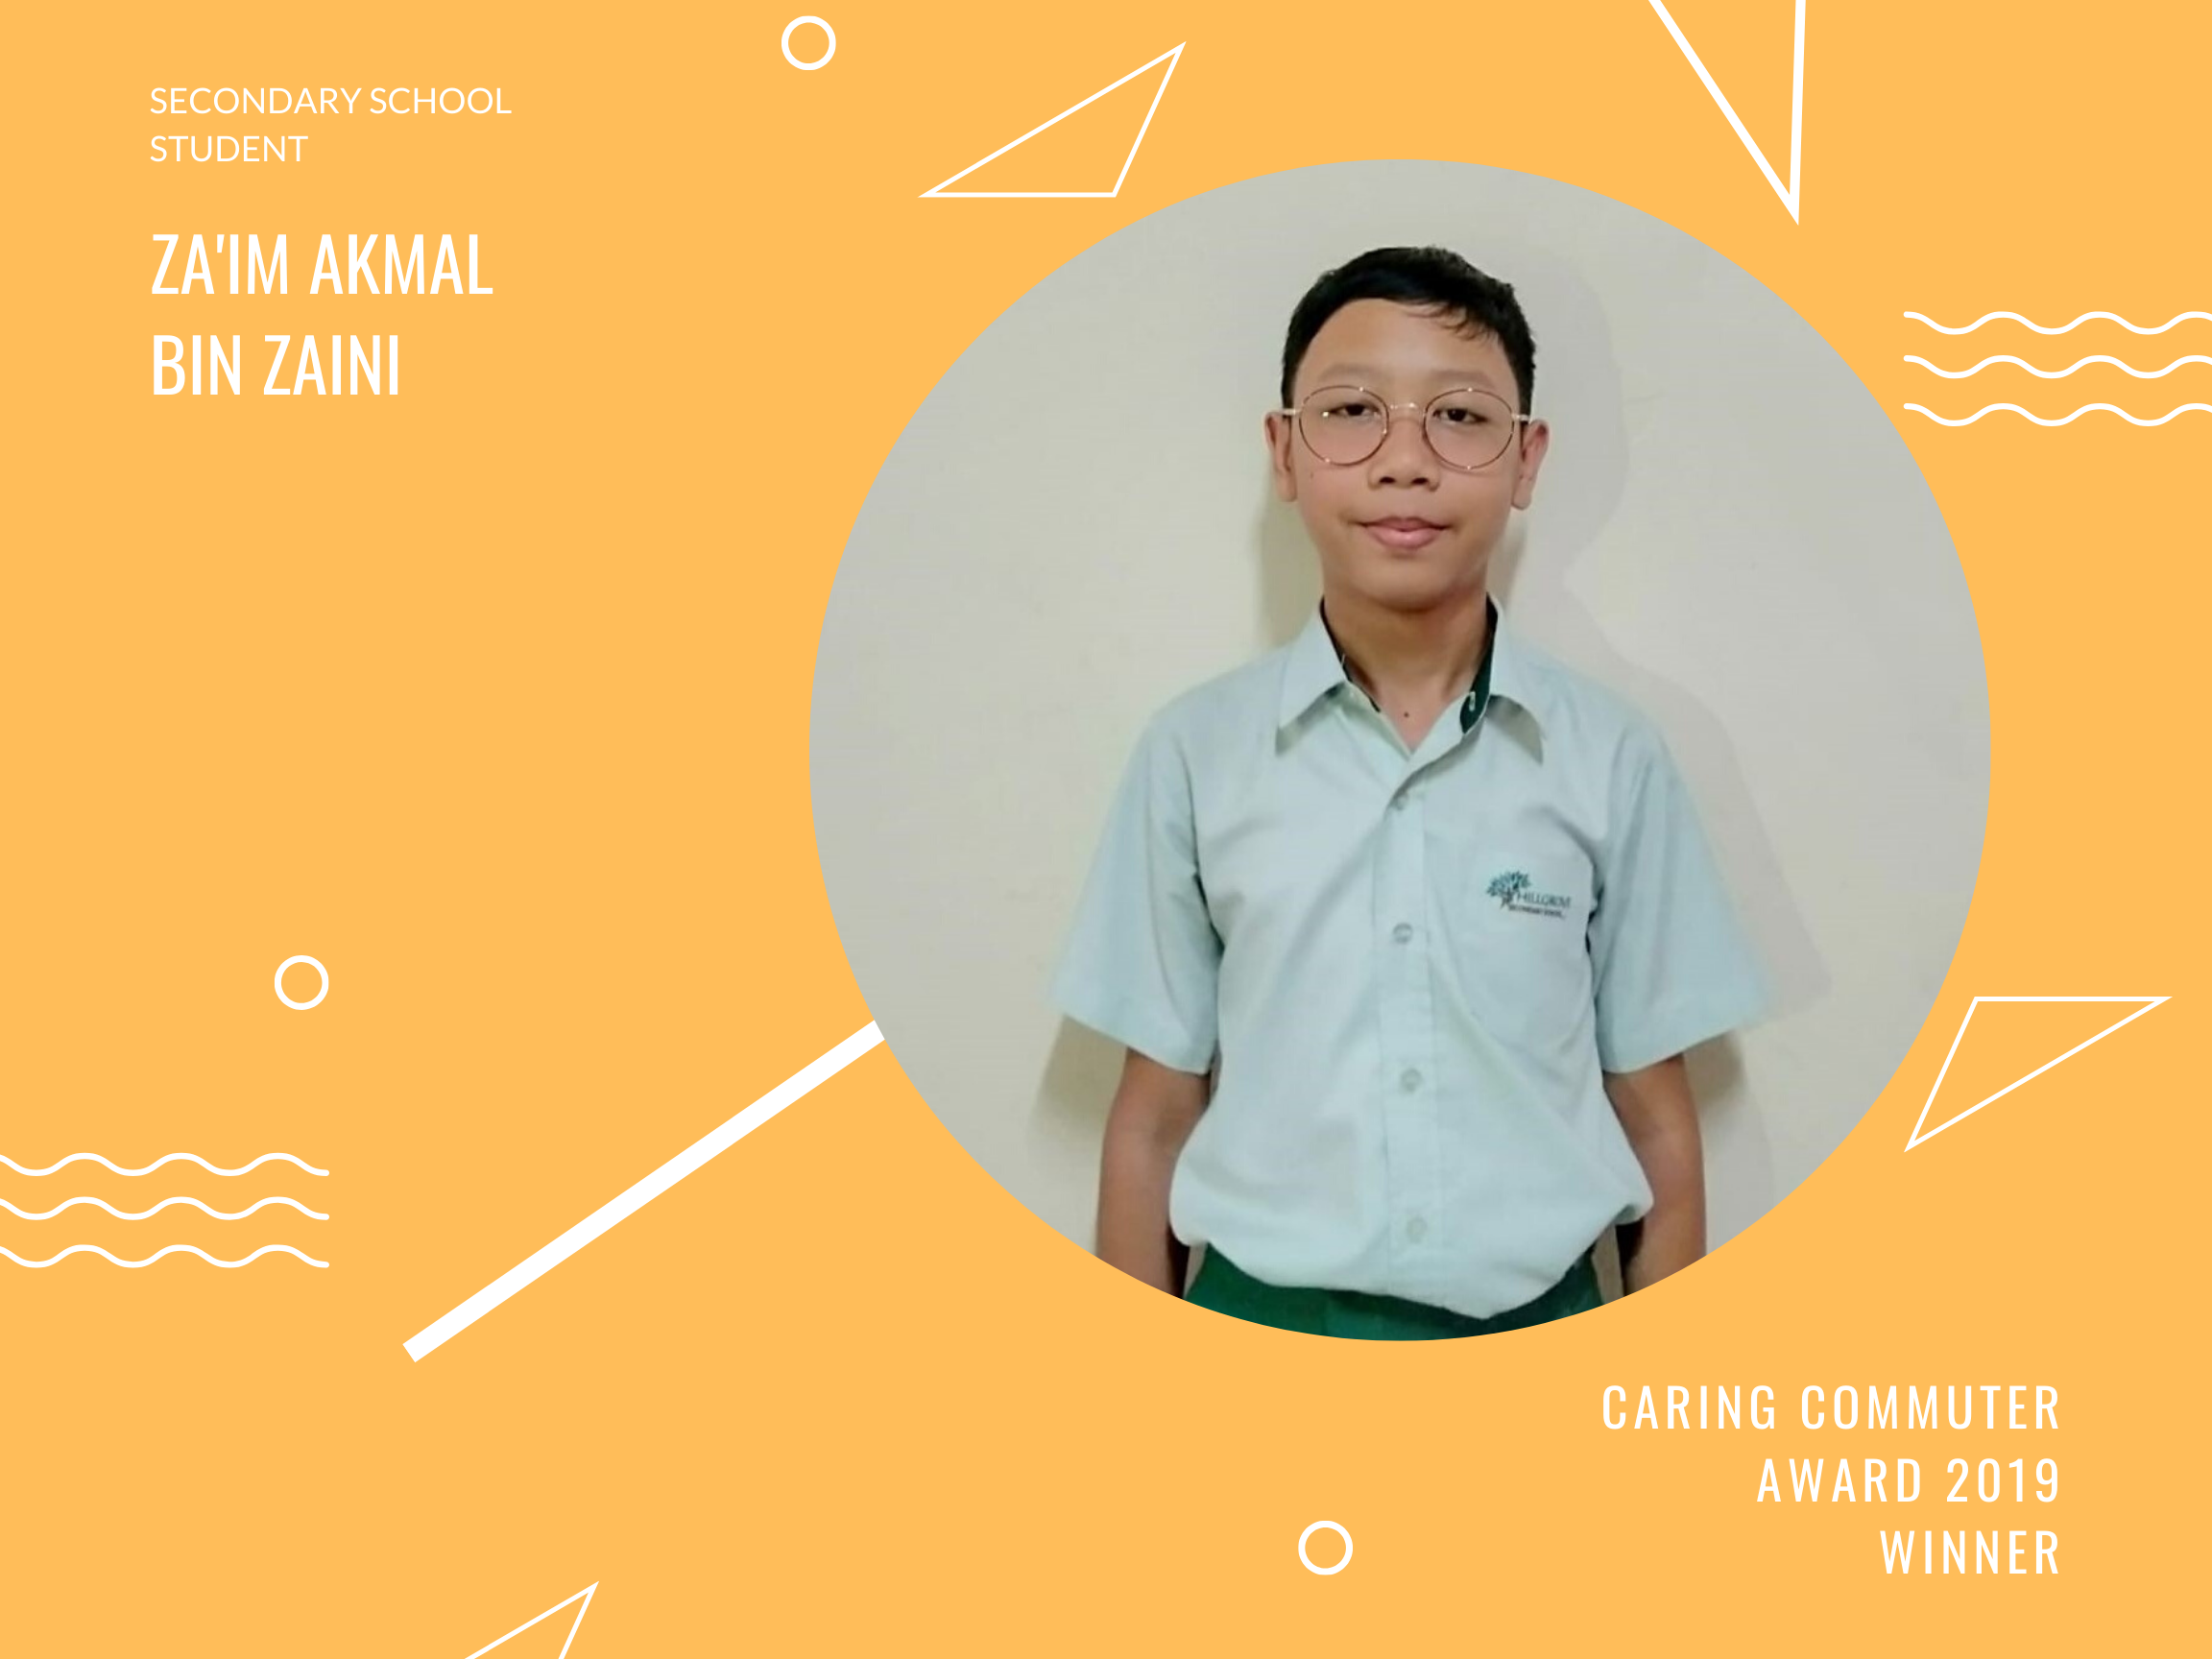 Meet Za'im Akmal Bin Zaini, Secondary School Student and Caring Commuter Award 2019 Winner